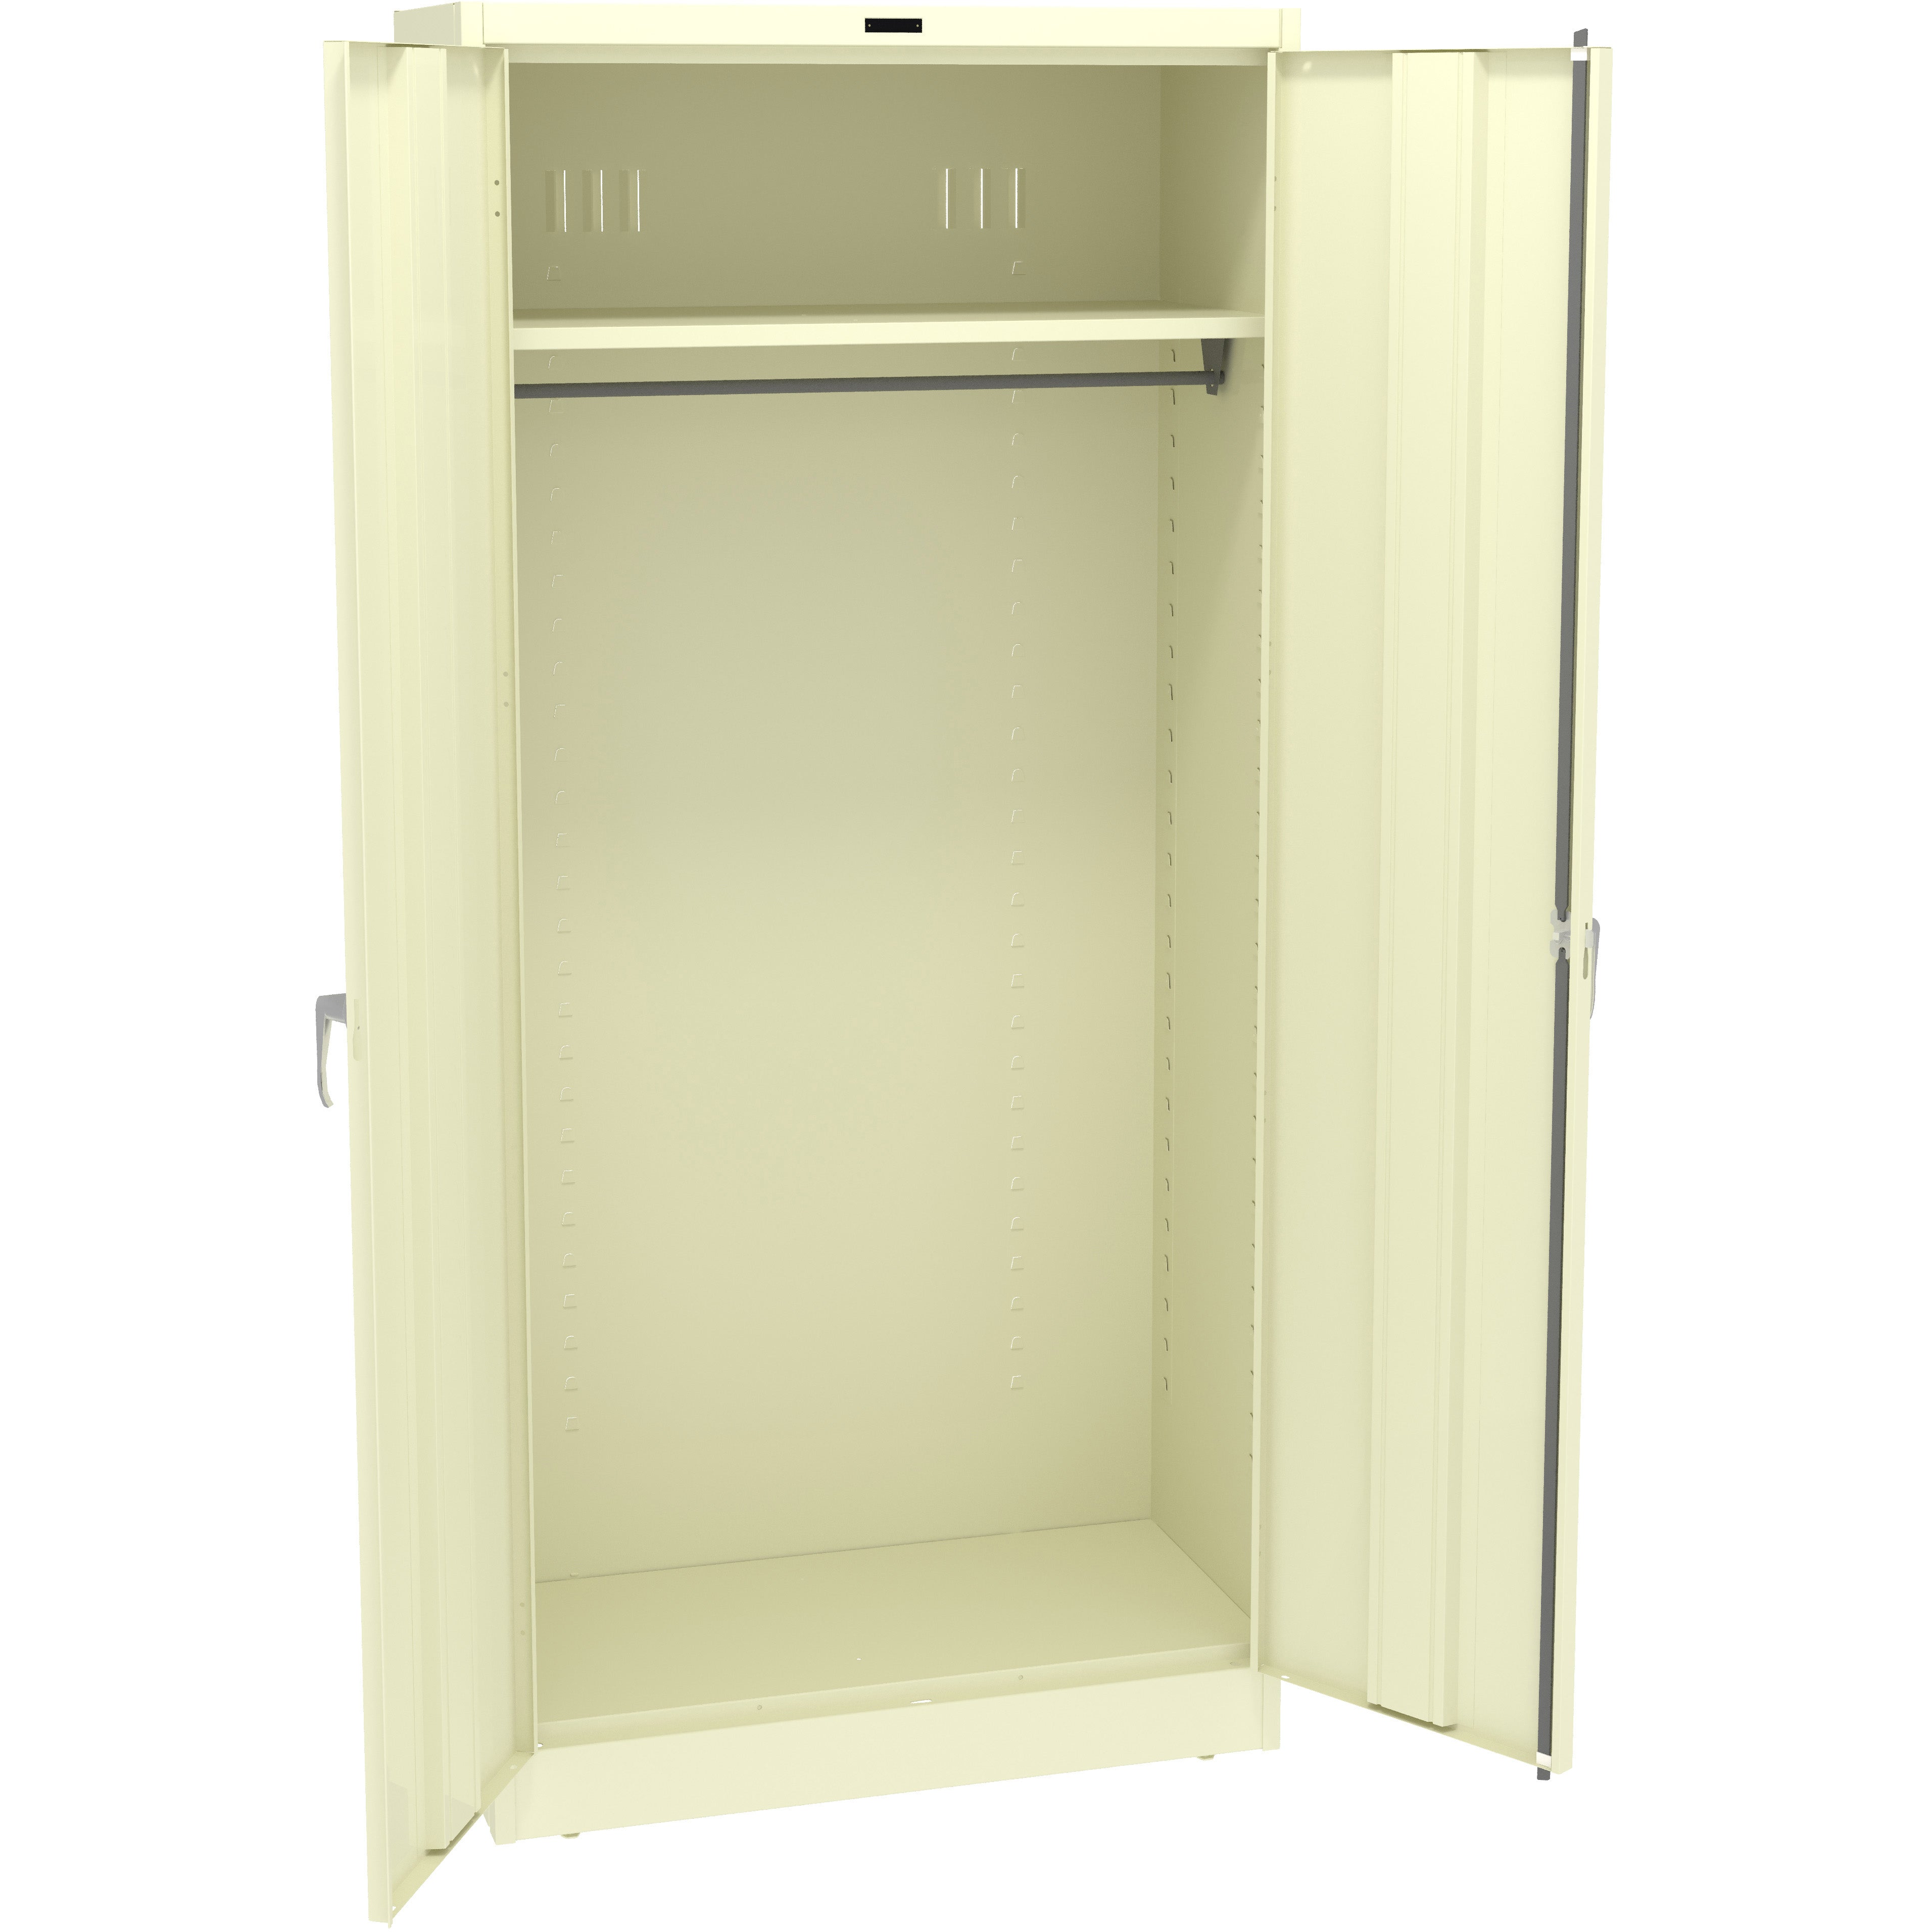 Tennsco 78" High Deluxe Wardrobe Cabinet - Assembled, 7818W